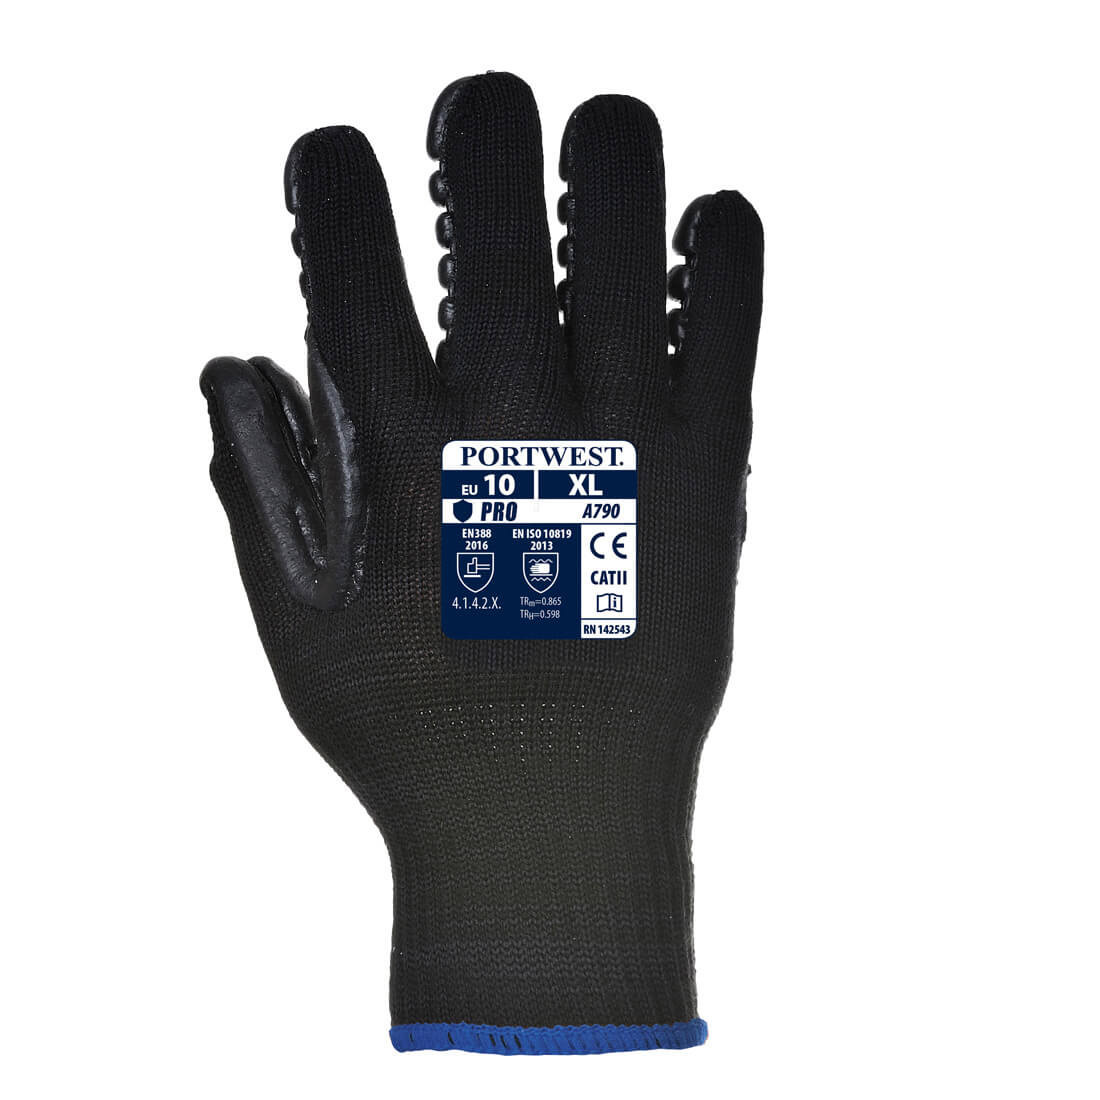 Anti Vibration Glove - Personal protection